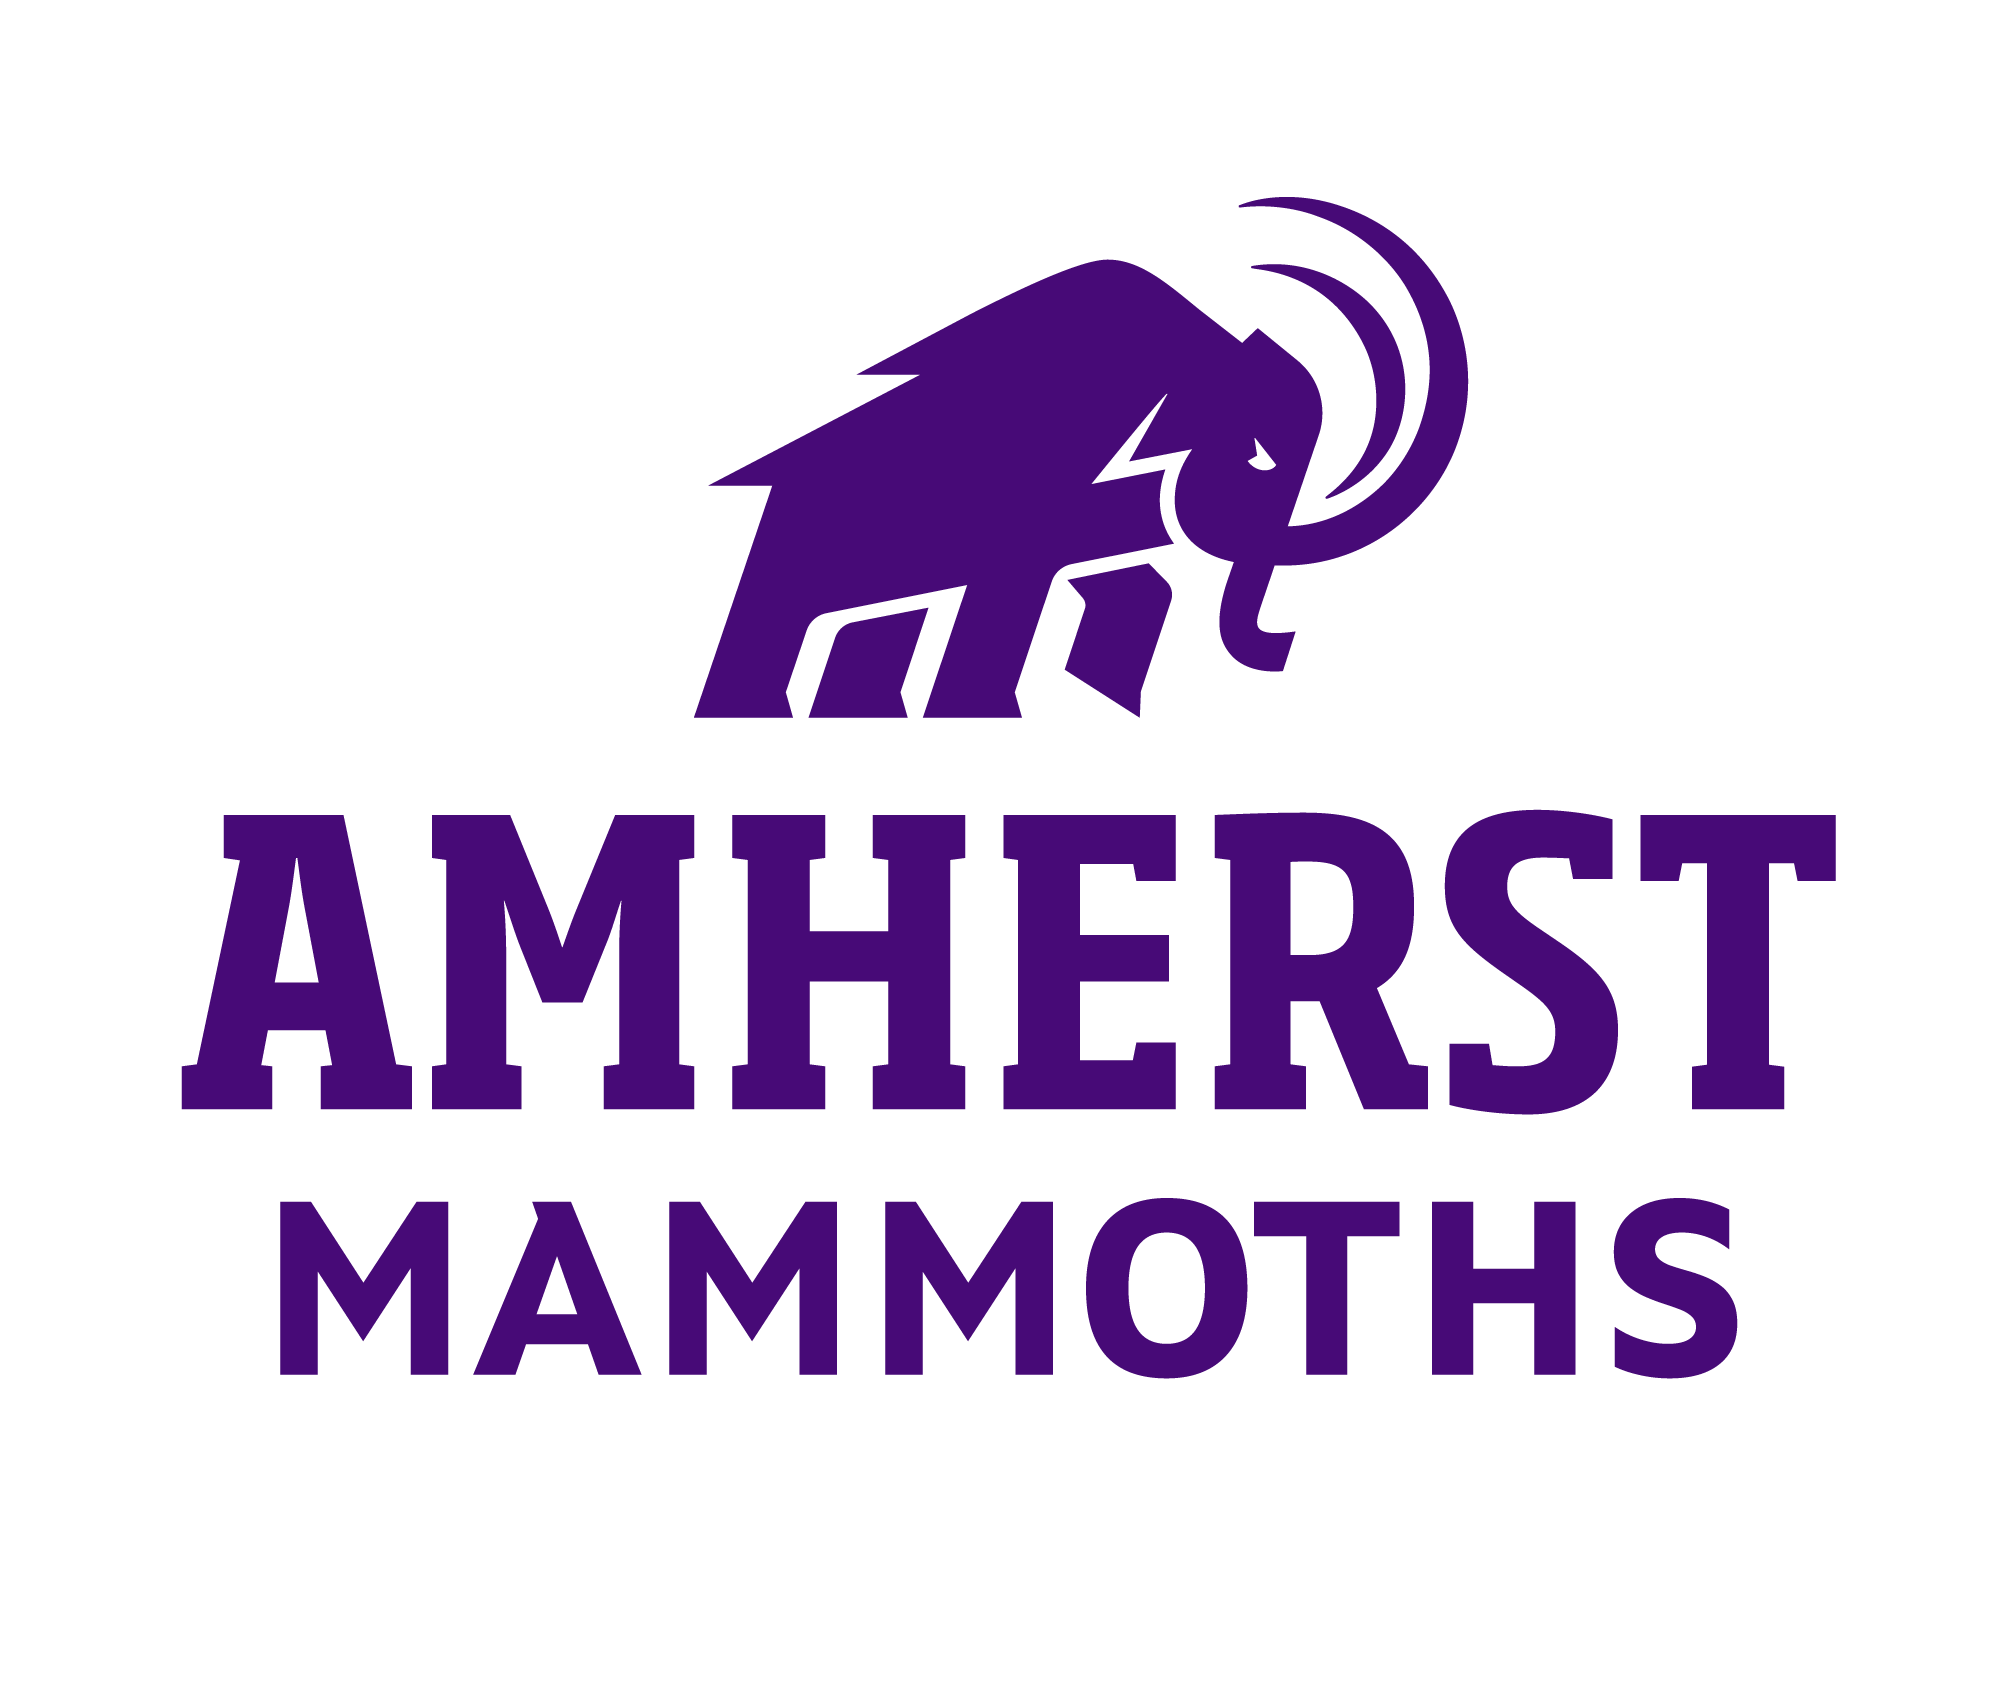 Mammoth logo with caption СMammoths